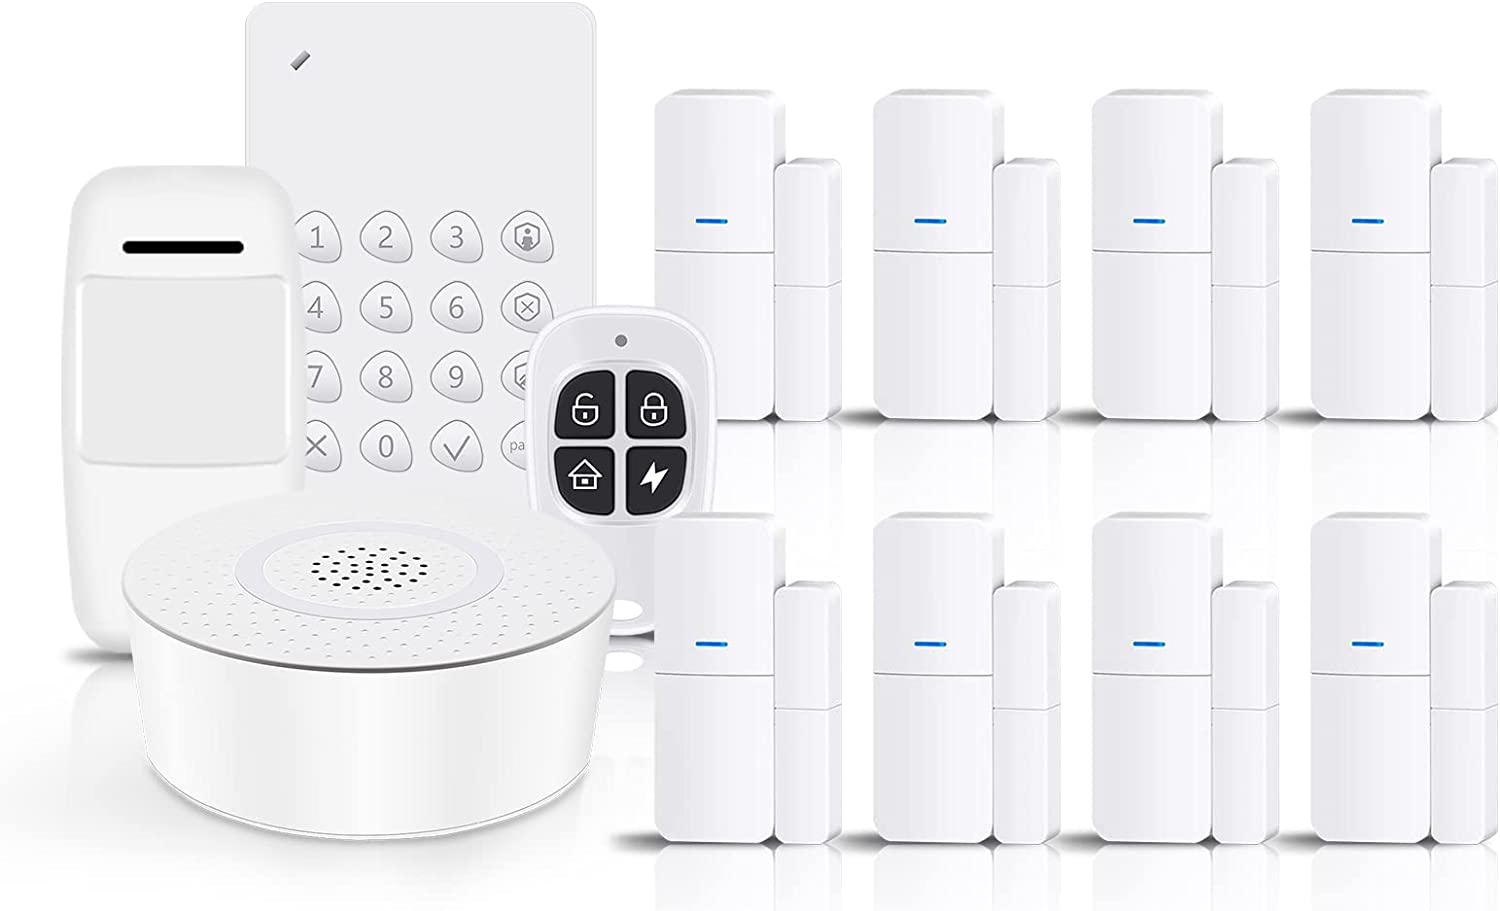 tolviviov Door Alarm System, Beta DIY Smart Home Alarm Security System 12 Pieces-Kit (Alarm Siren, Door Window Sensors, Remotes, Motion Sensor, Keypad), Work with Alexa, for House, Apartment